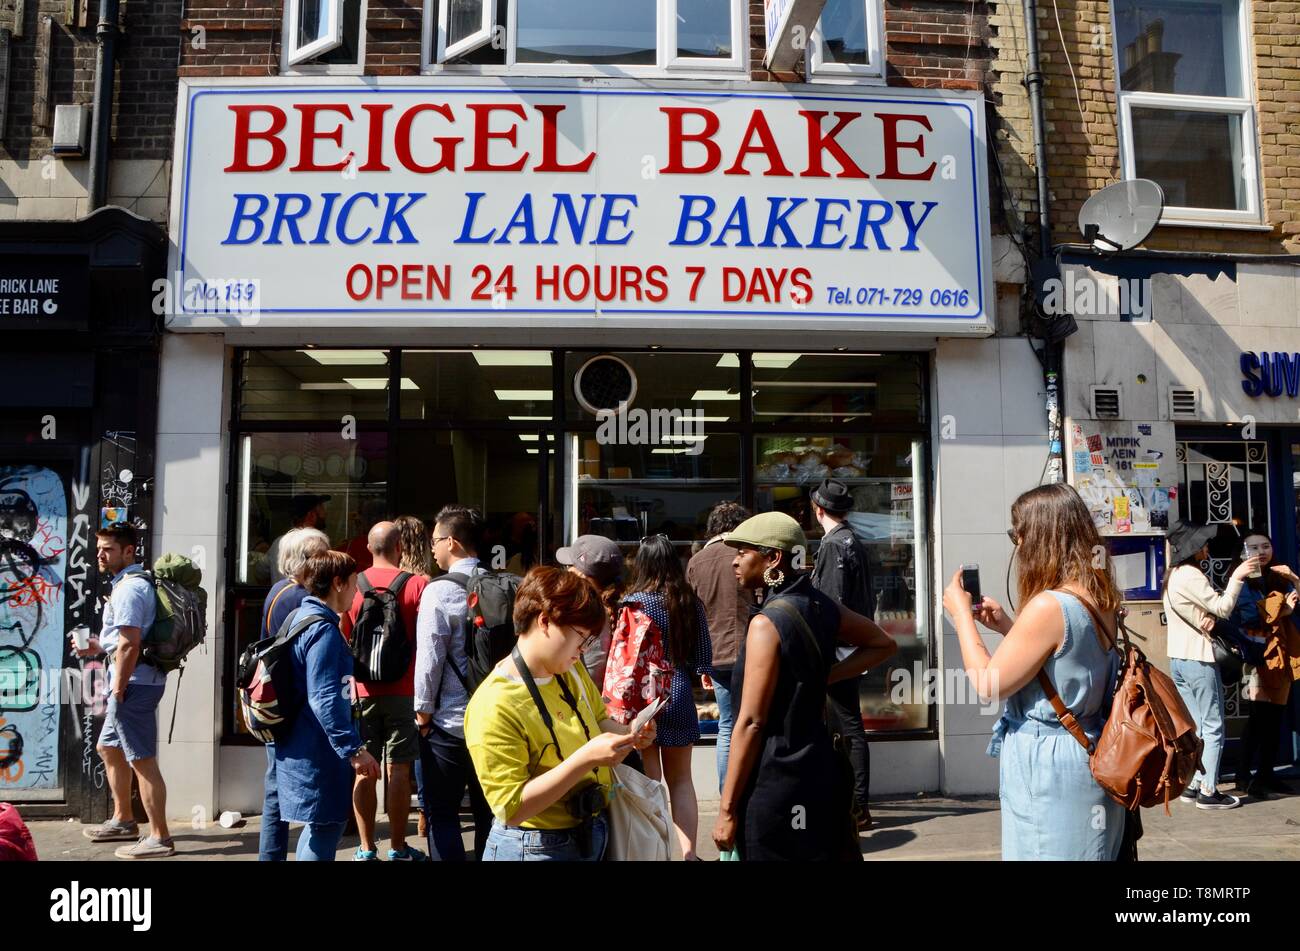 the bagel bake shop on brick lane london uk Stock Photo